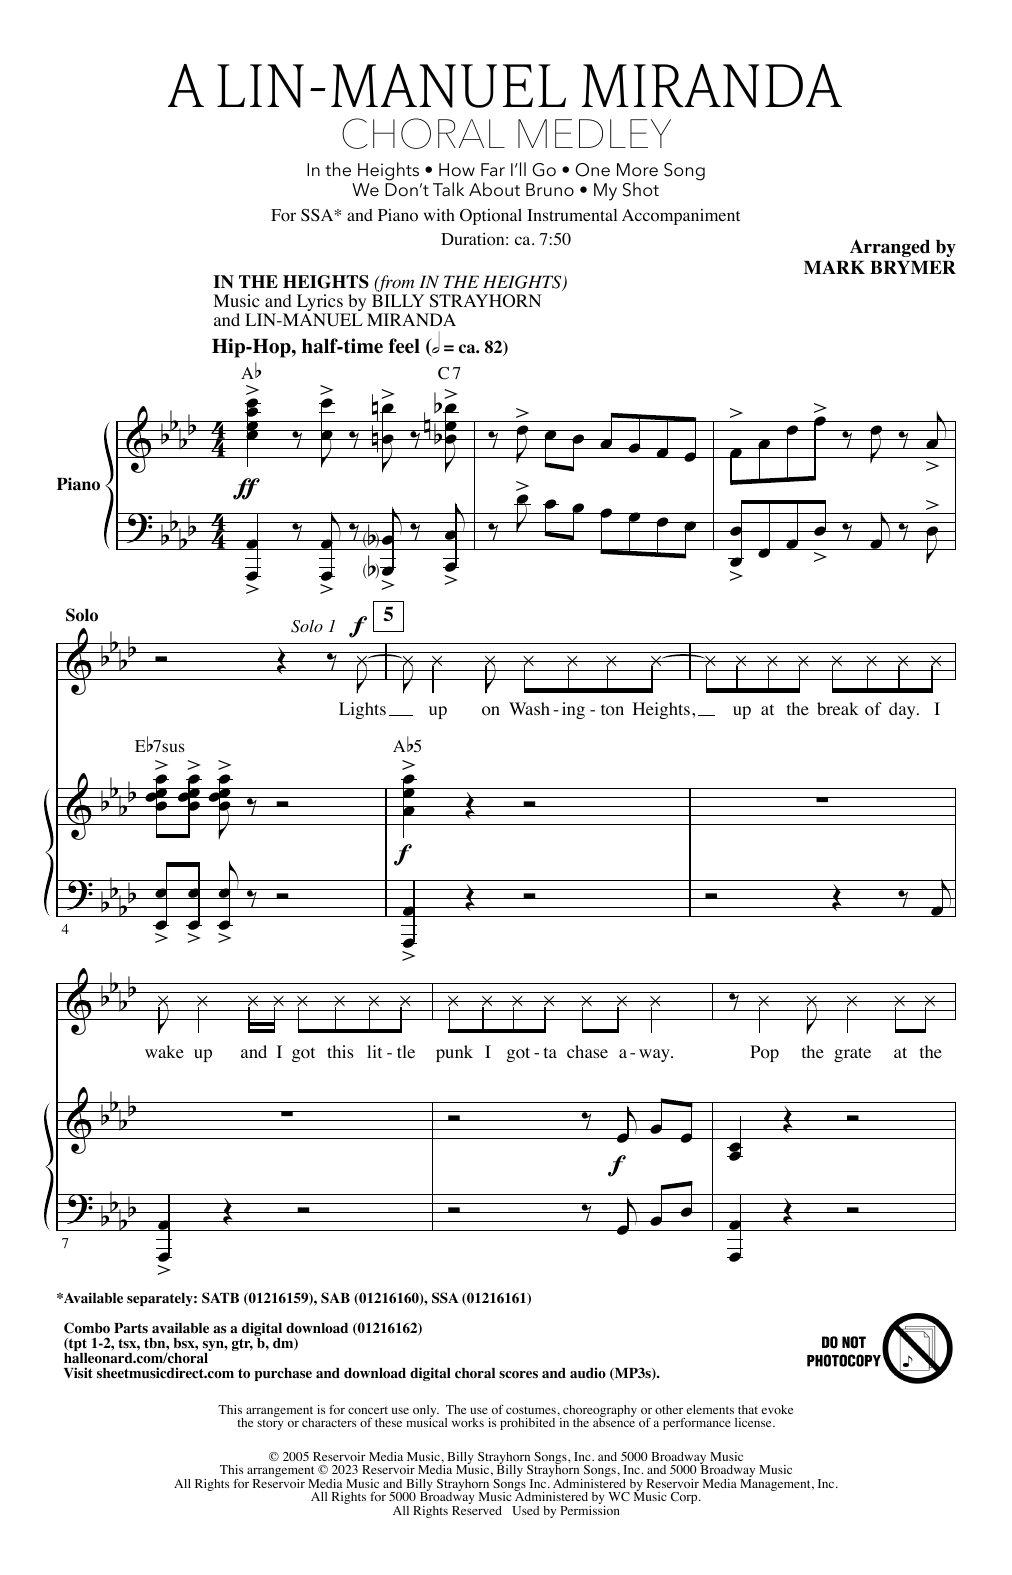 Lin-Manuel Miranda A Lin-Manuel Miranda Choral Medley (arr. Mark Brymer) sheet music notes printable PDF score